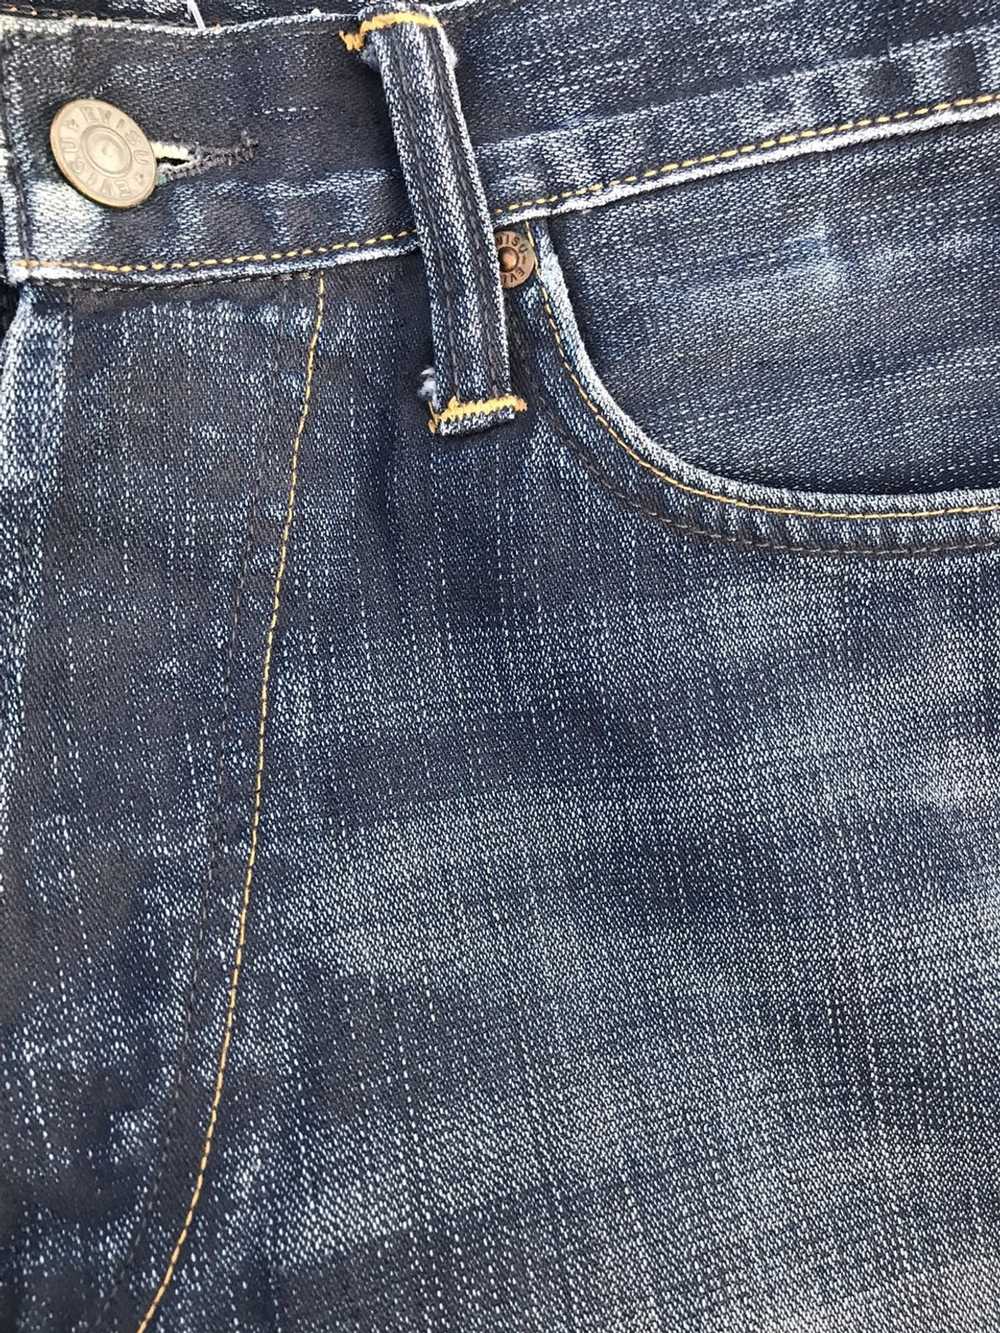 Evisu × Japanese Brand × Vintage Evisu jeans deni… - image 8